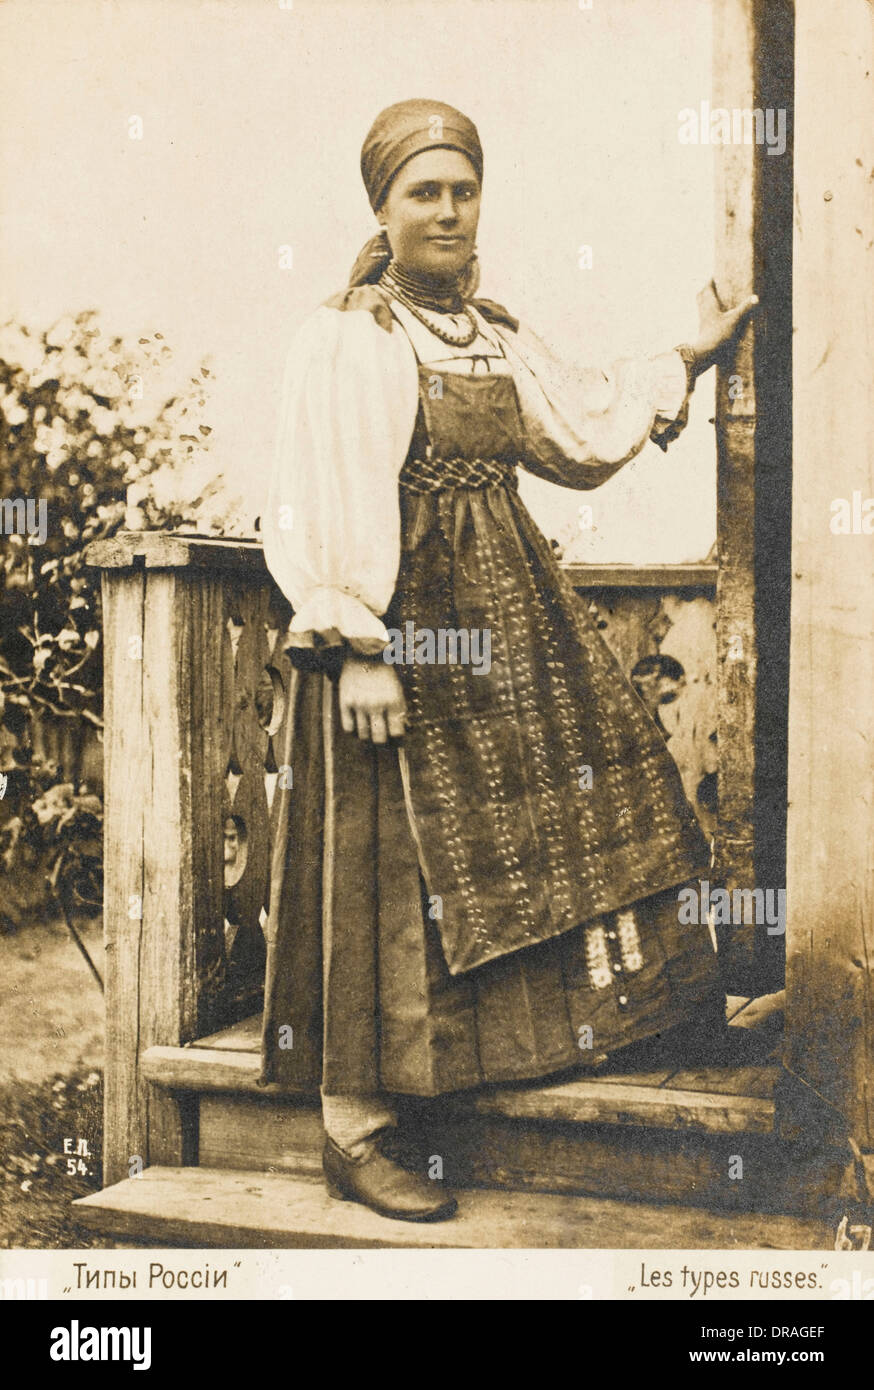 https://c8.alamy.com/comp/DRAGEF/russian-woman-in-traditional-costume-DRAGEF.jpg